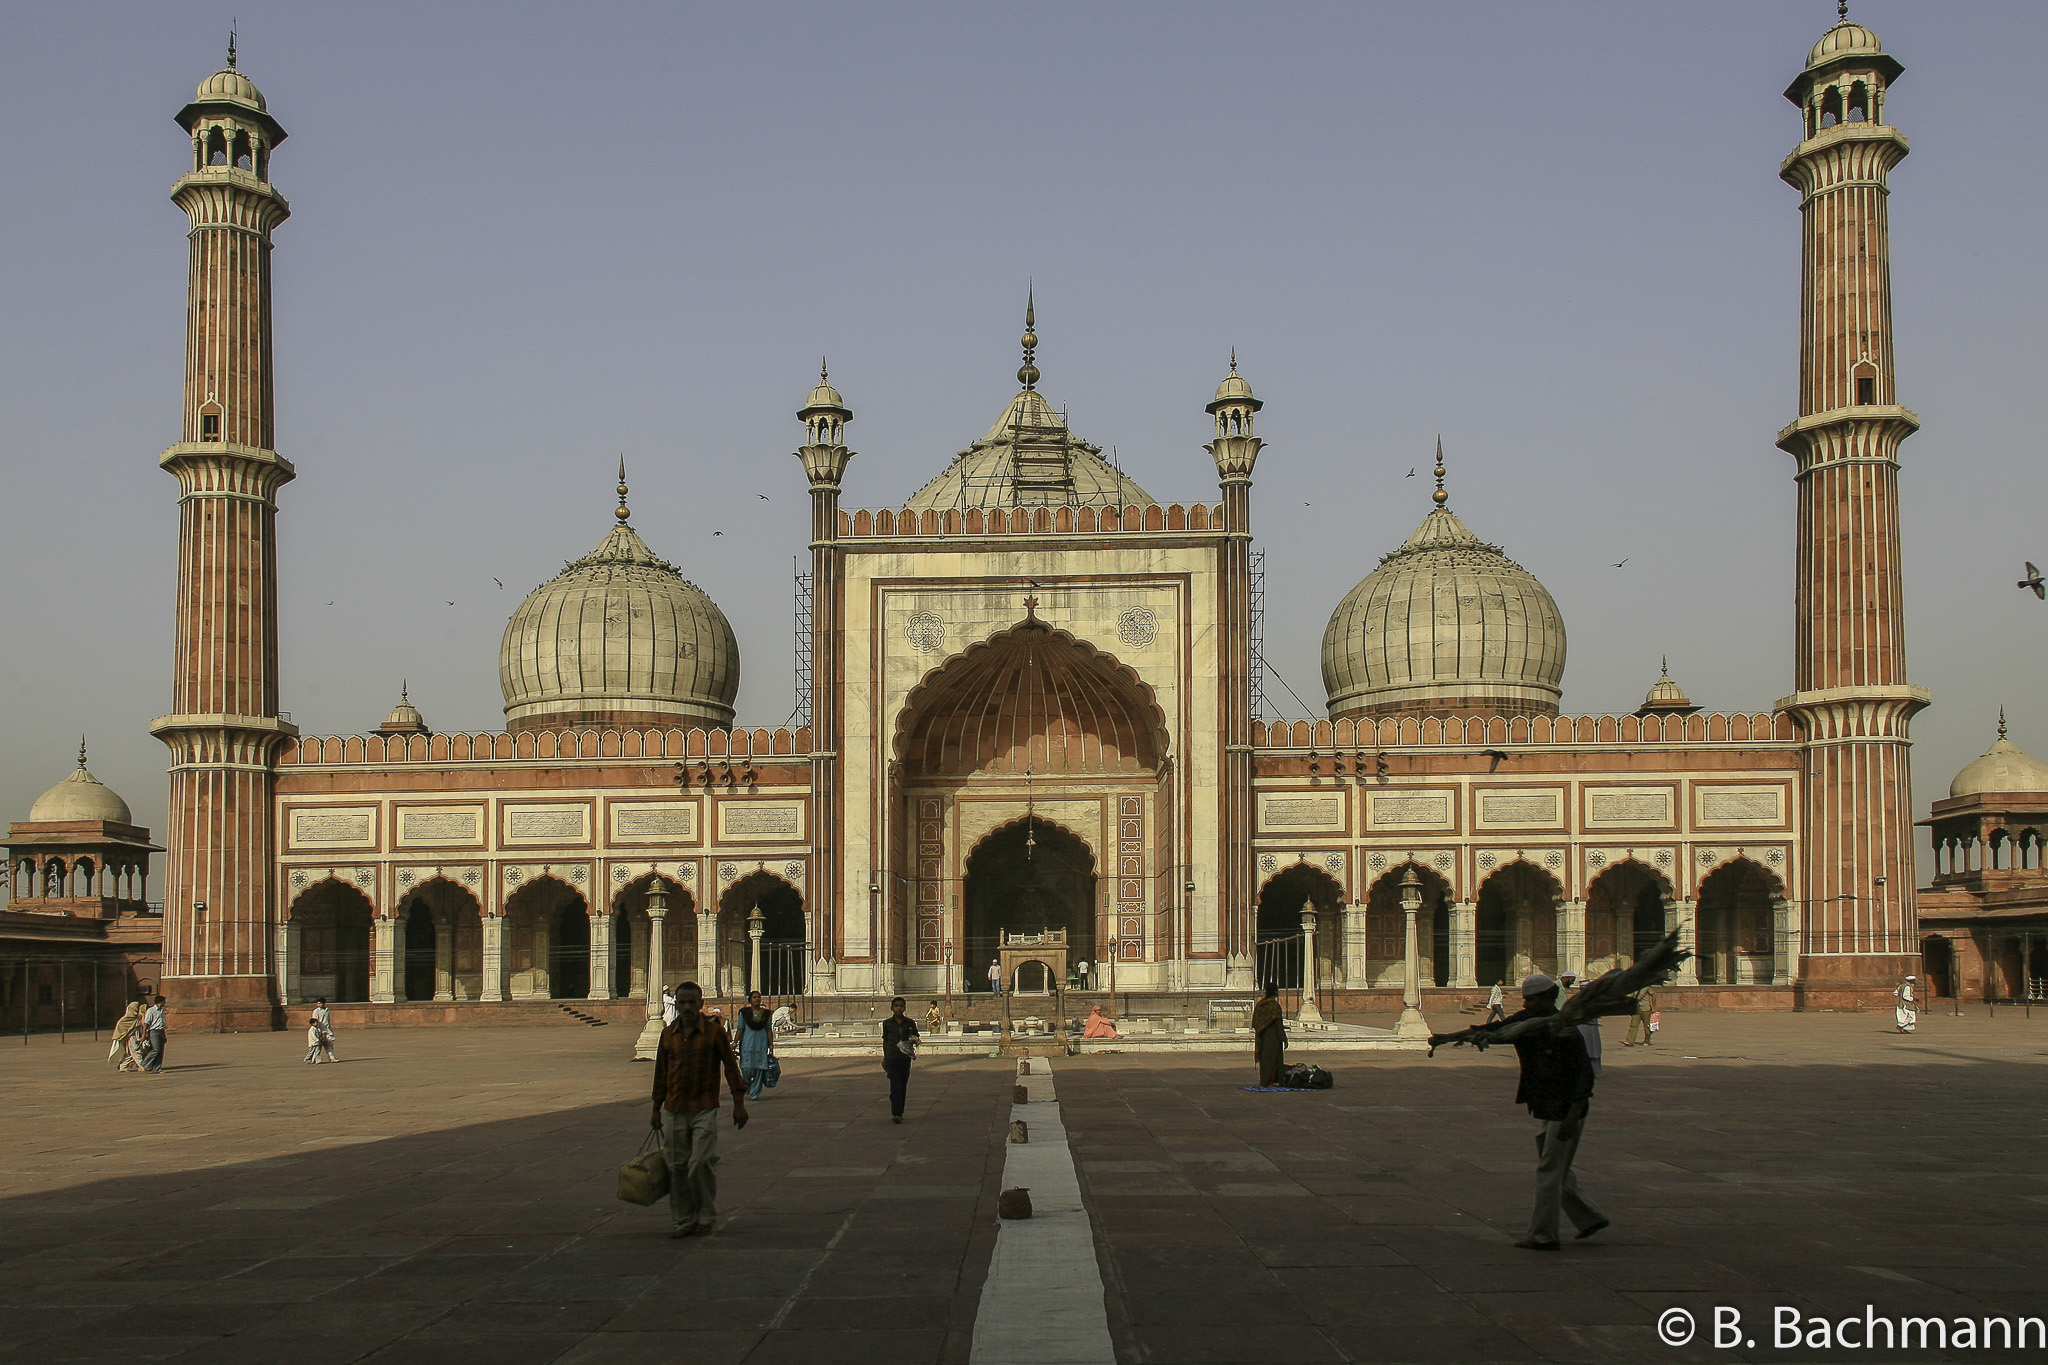 20100403_Delhi-Jama-Masjid_0018-Edit.jpg